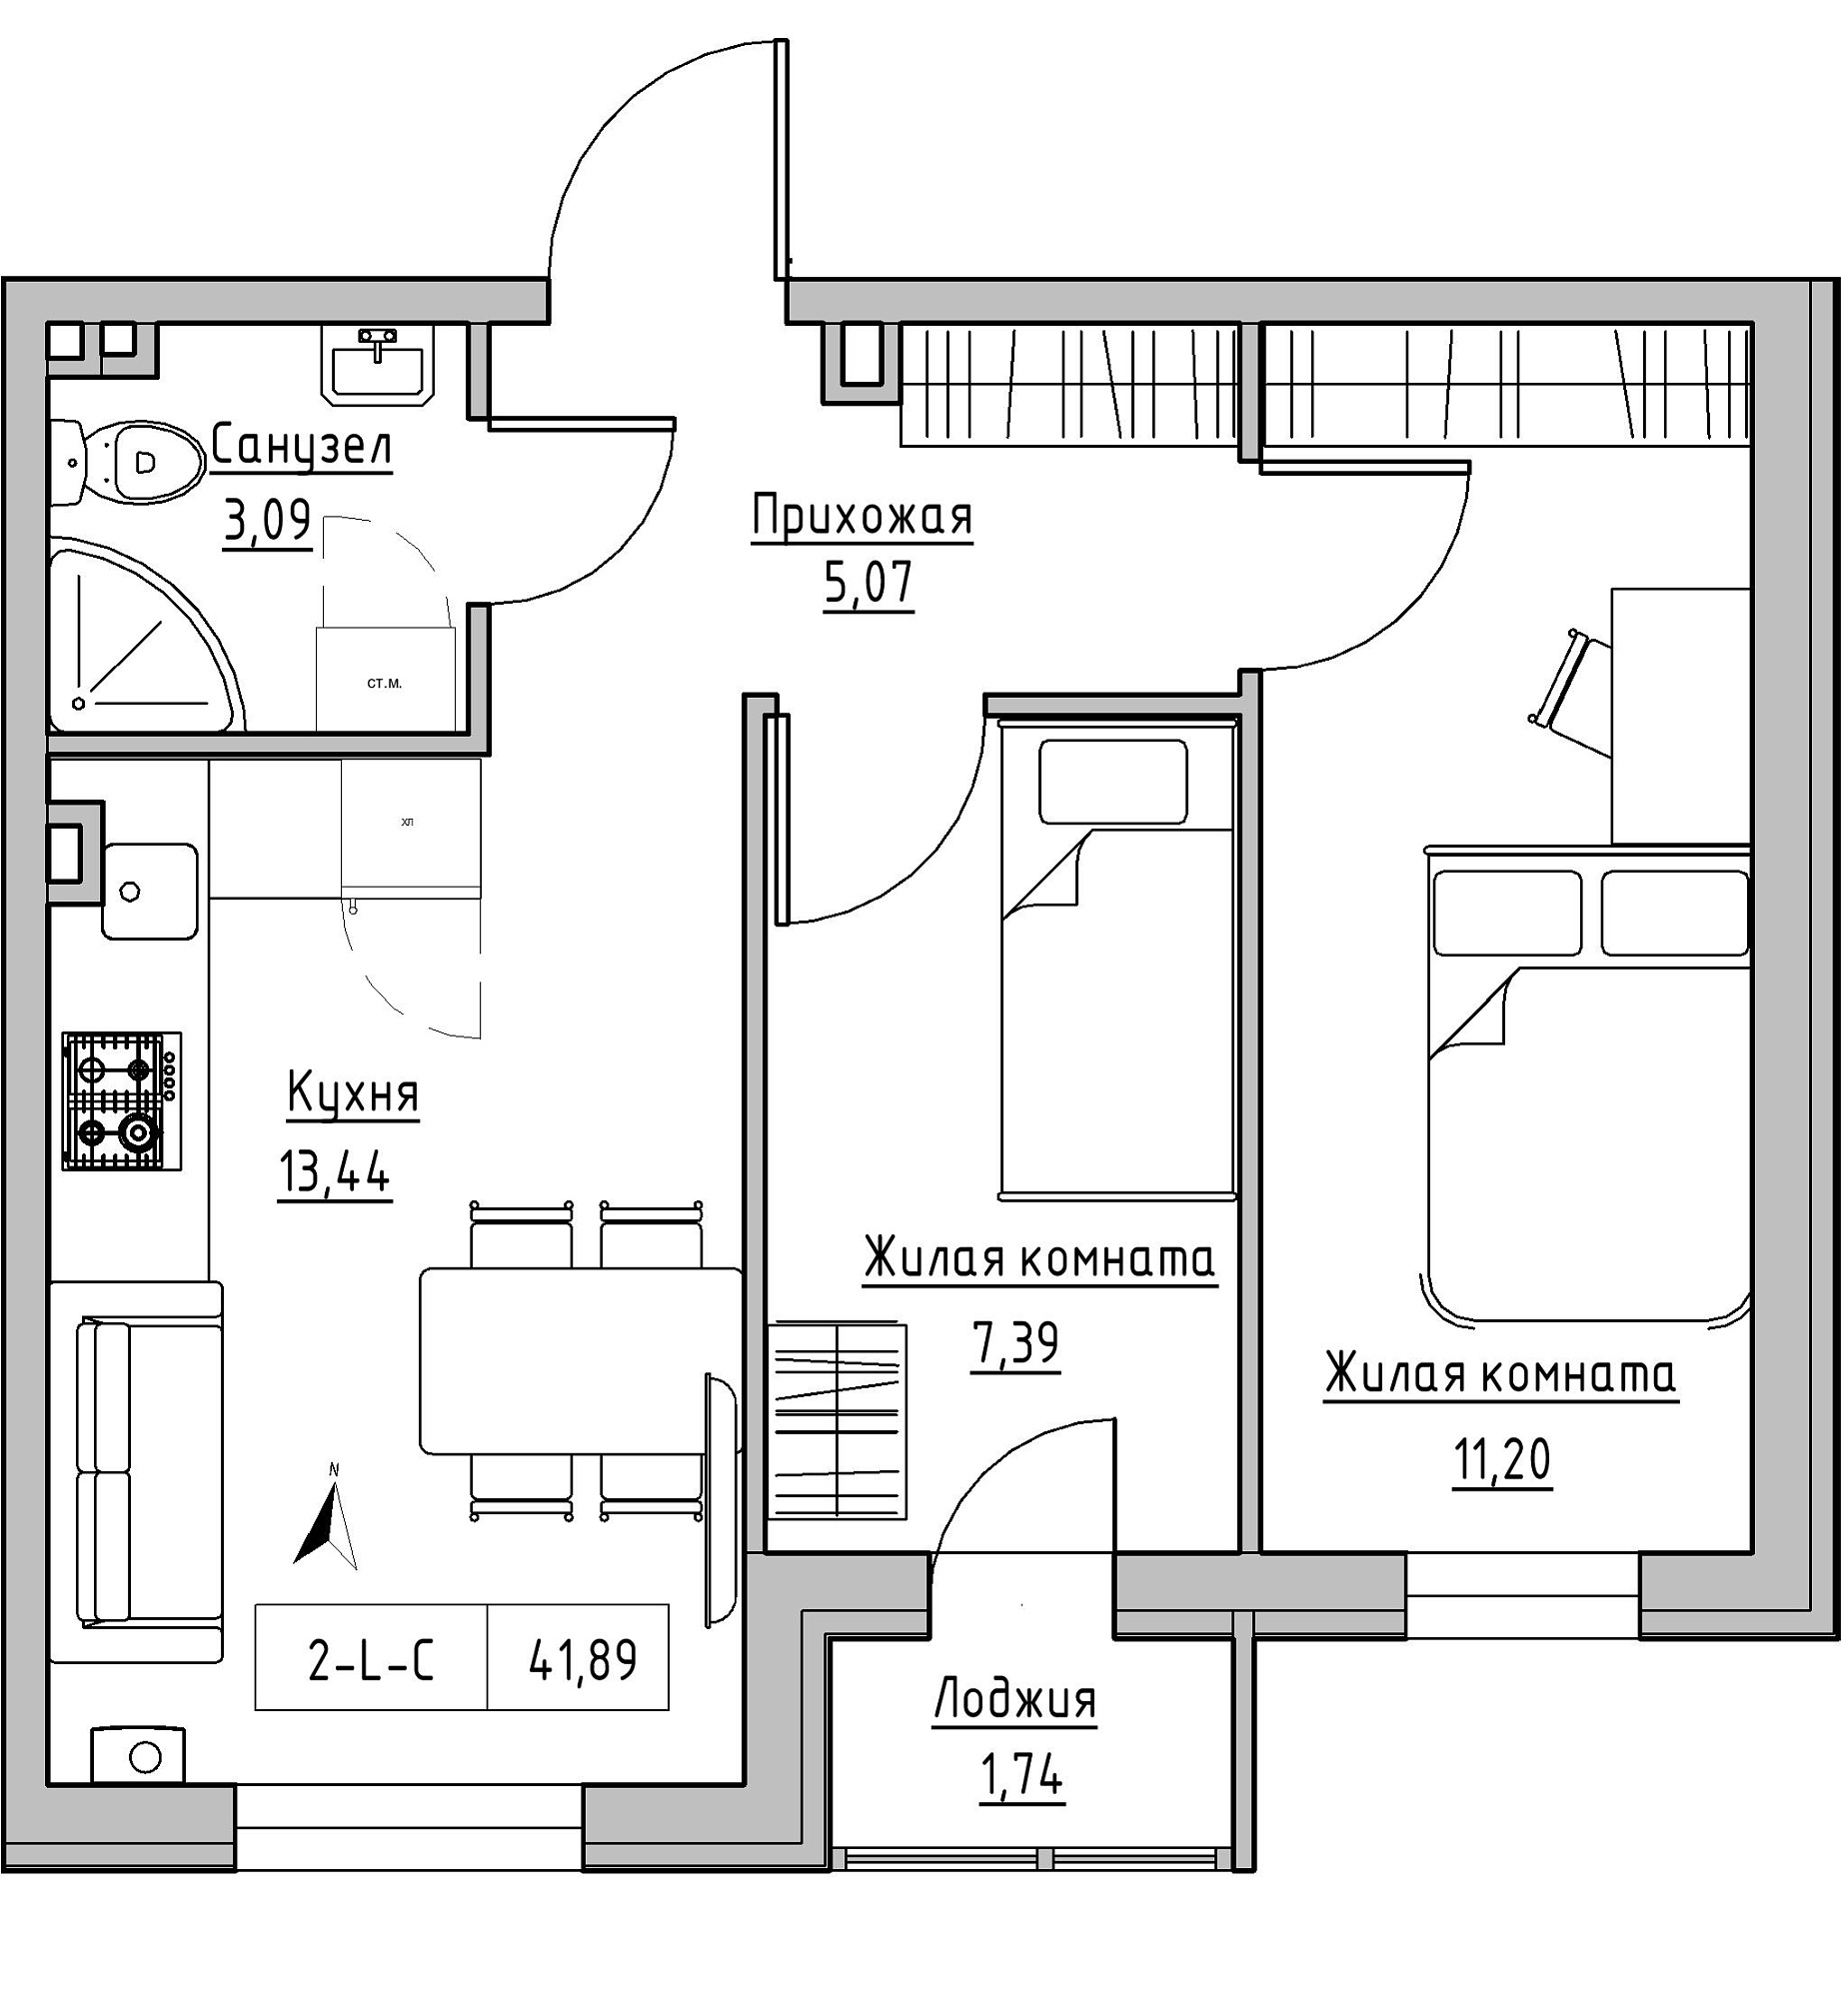 Planning 2-rm flats area 41.89m2, KS-024-01/0005.